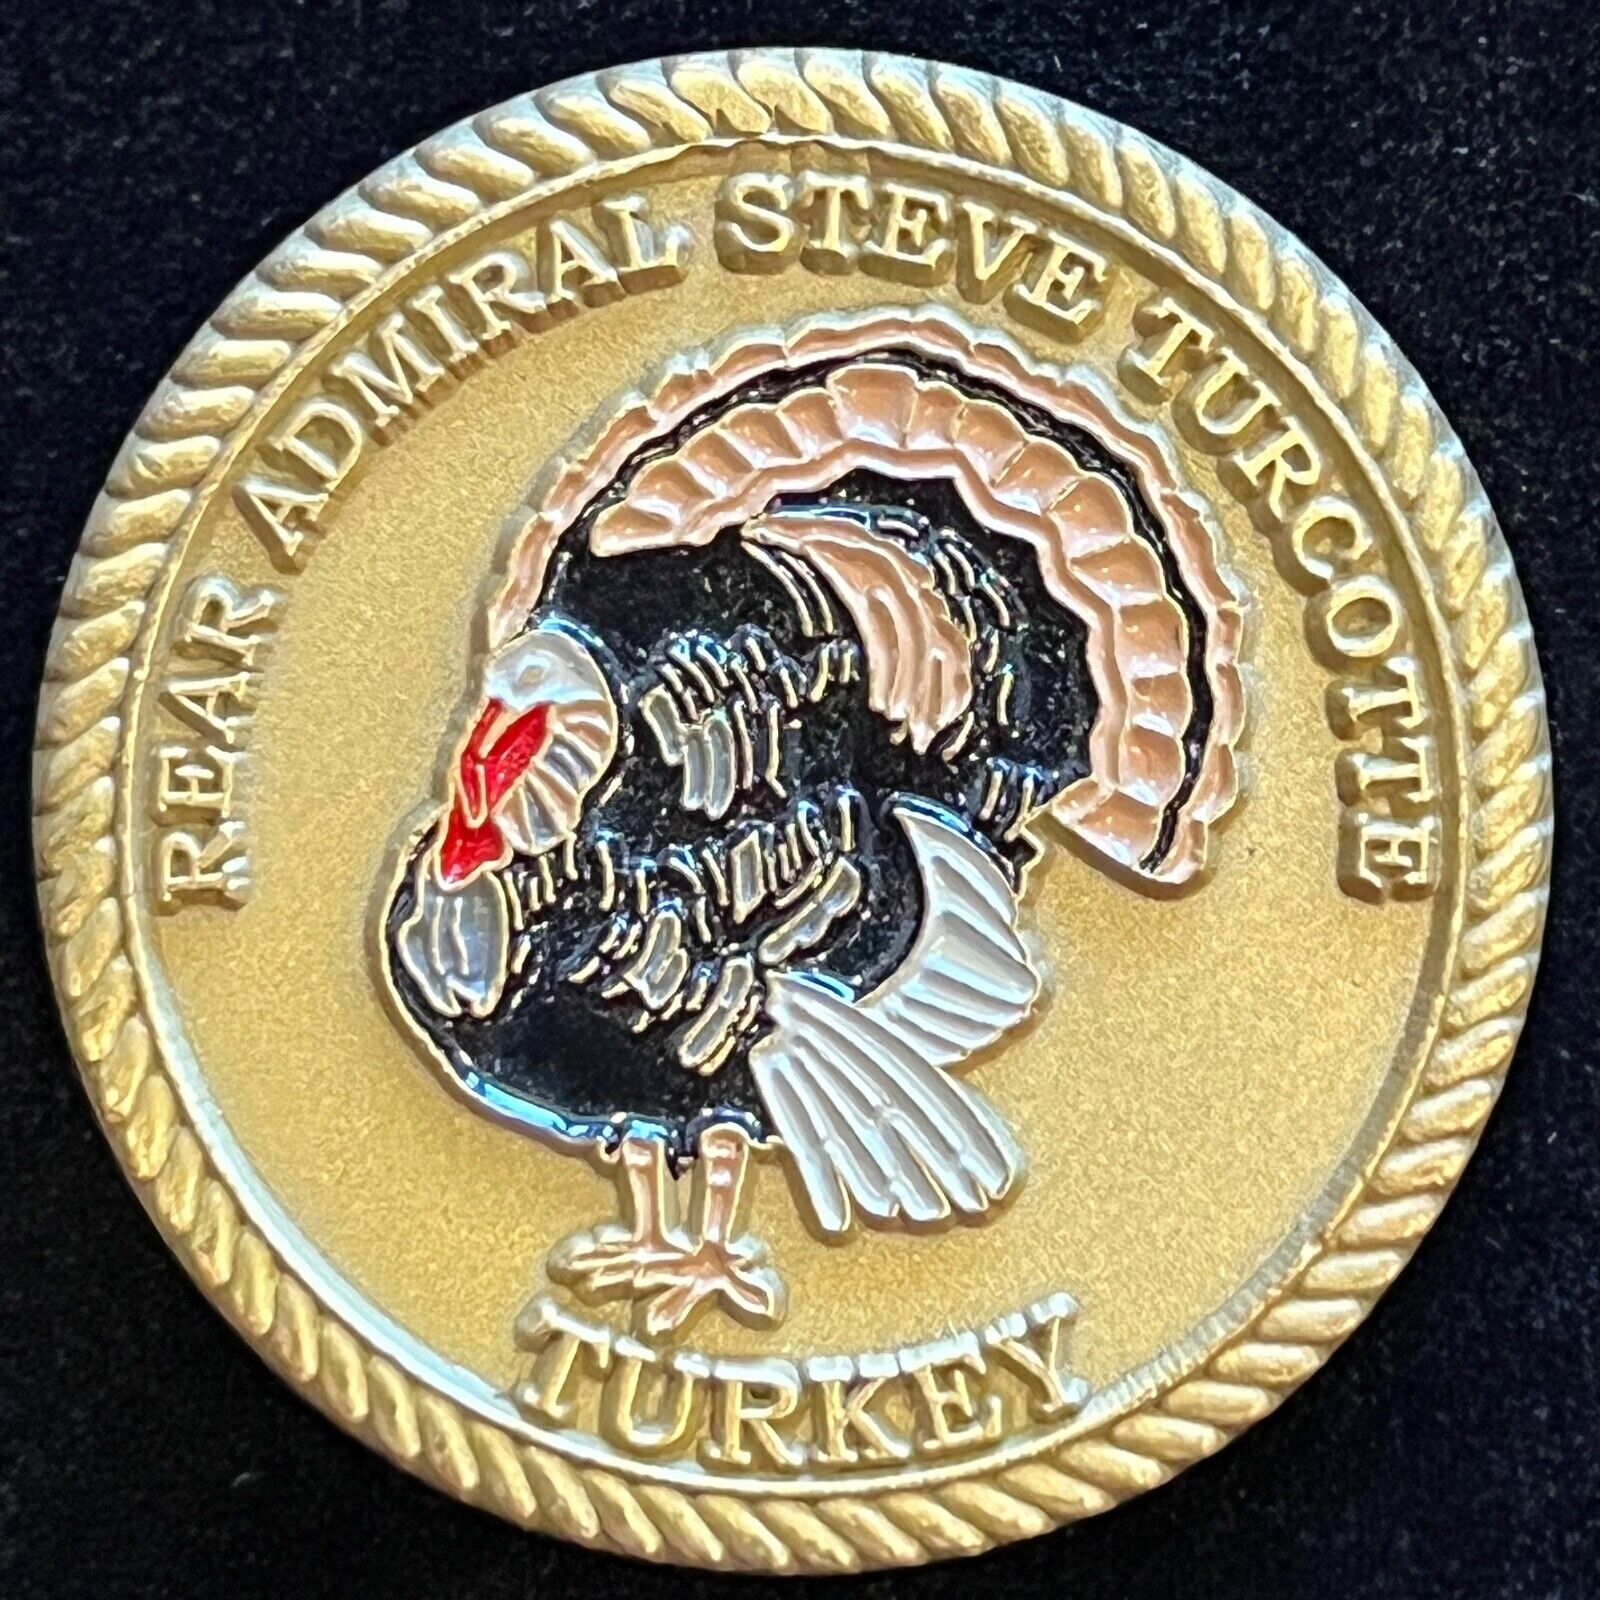 Rear Admiral Steve Turcotte Naval Aviator Challenge Coin